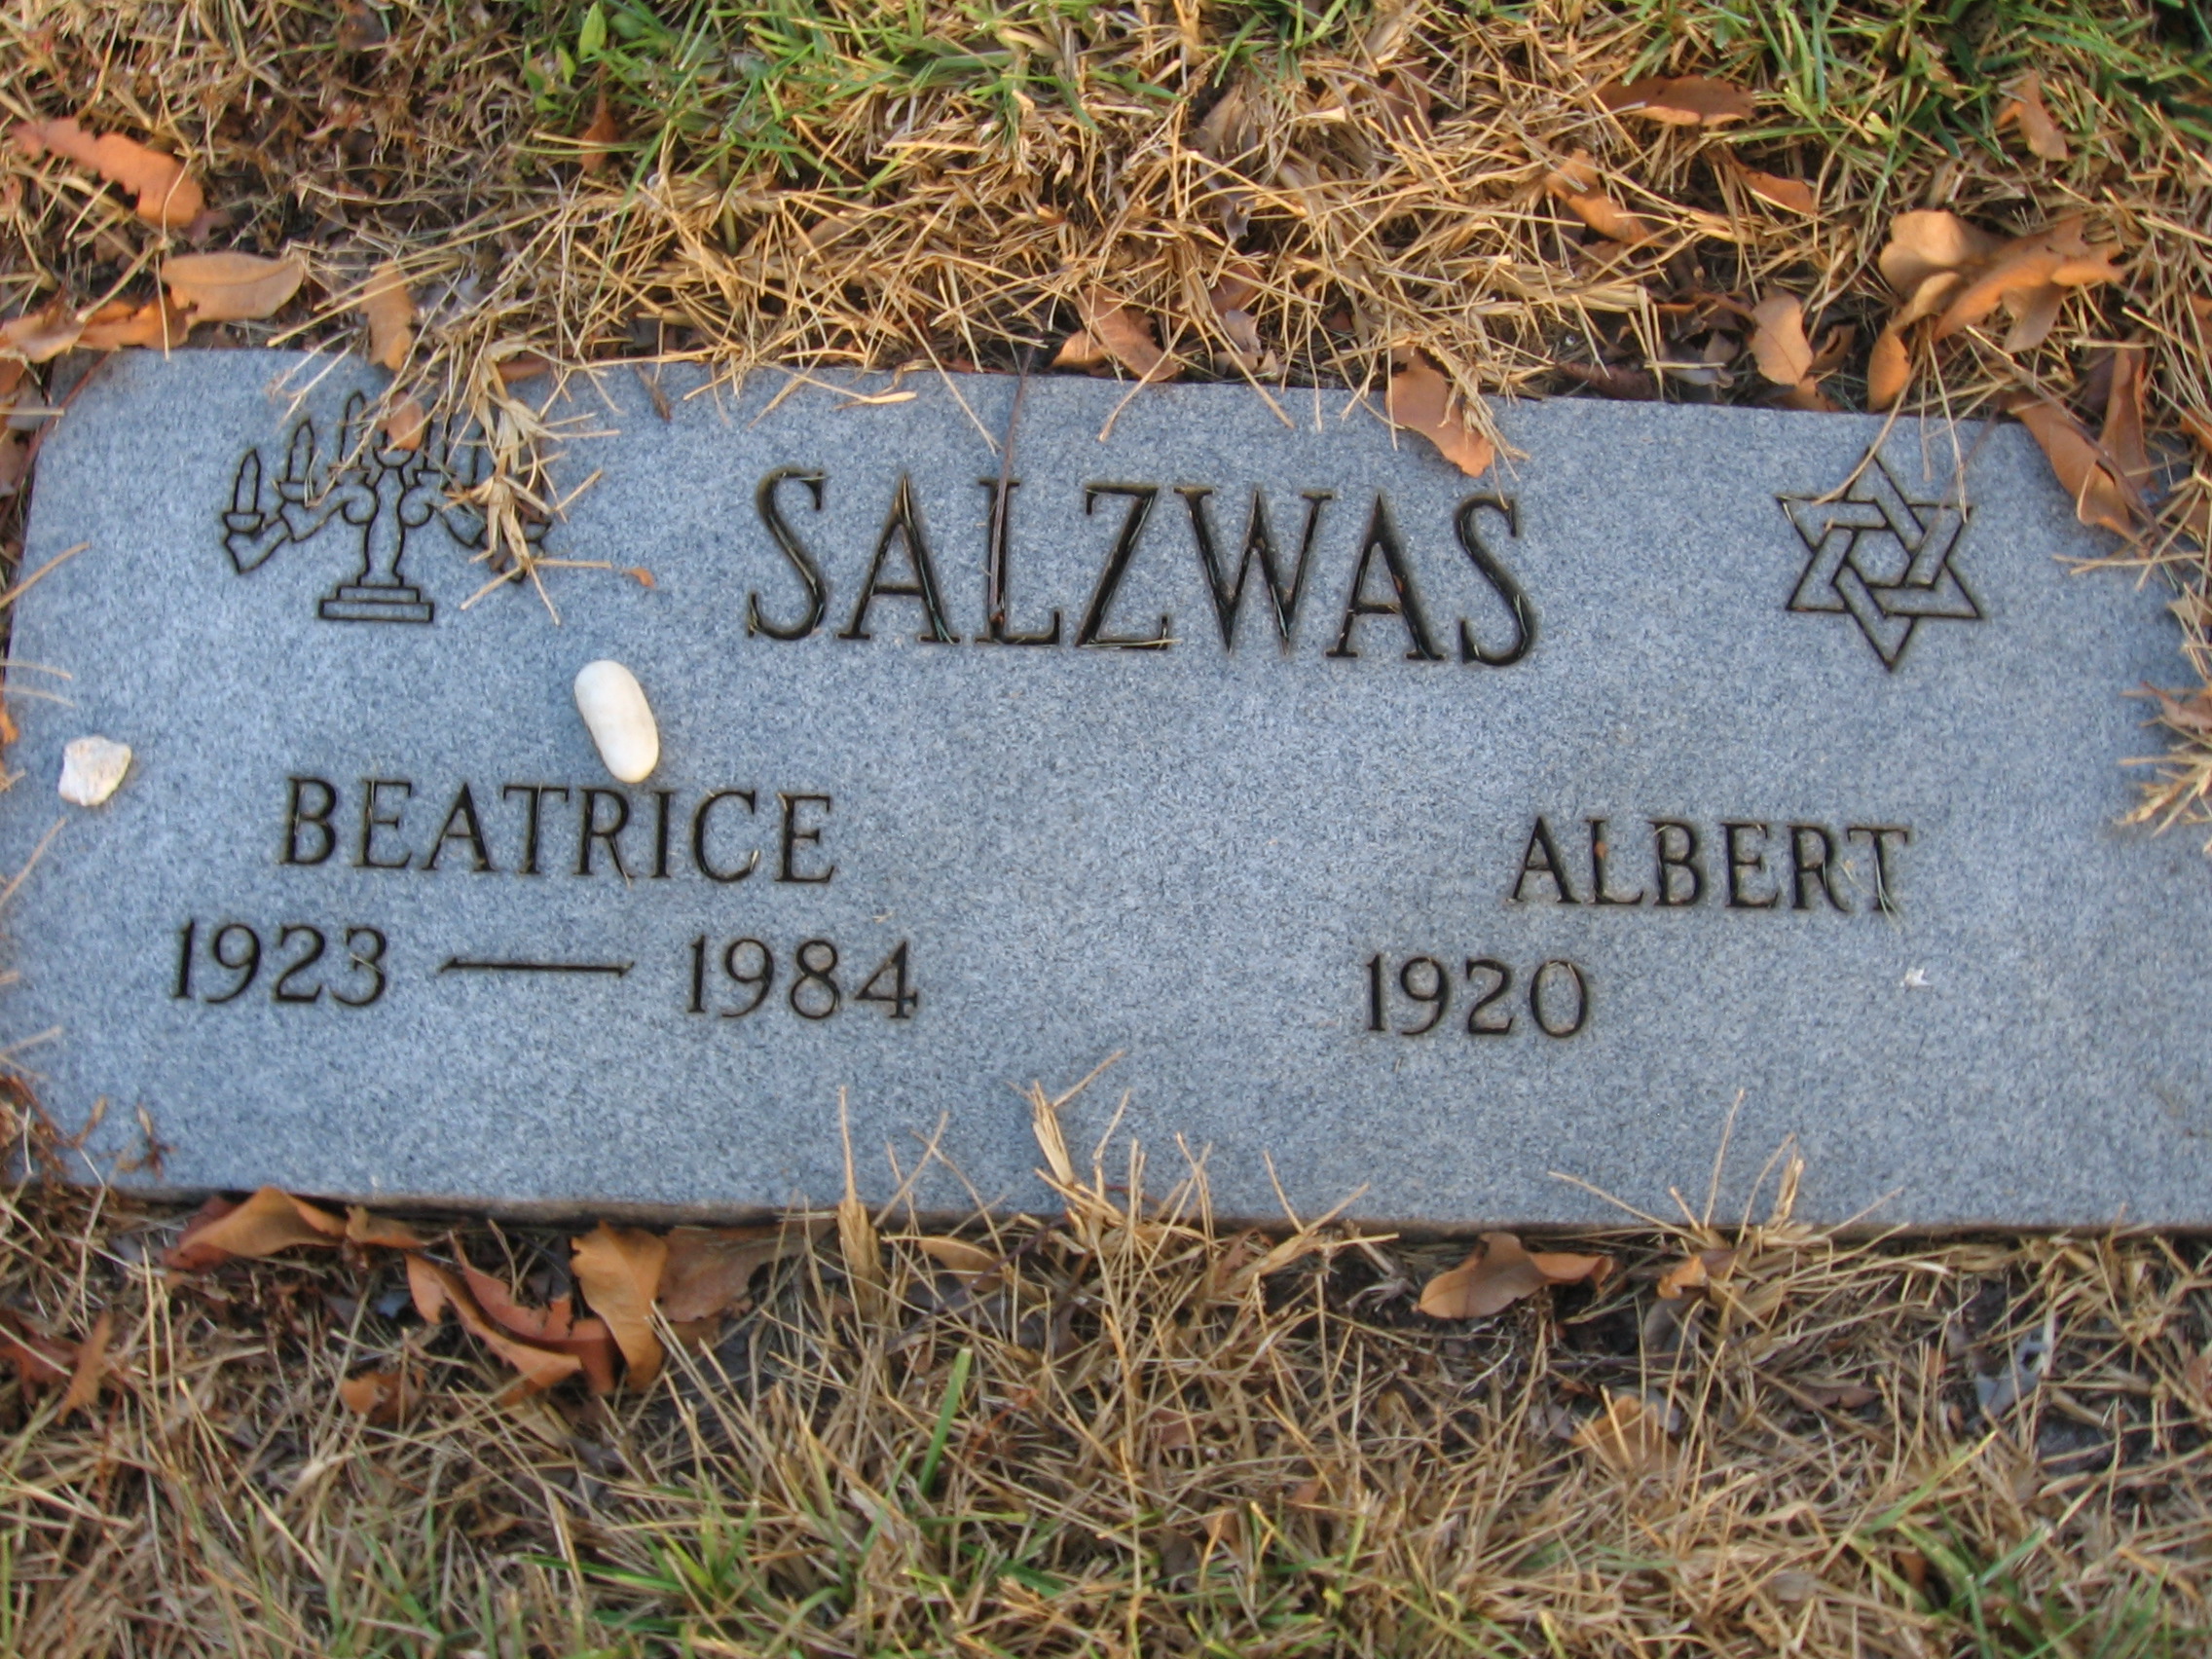 Beatrice Salzwas